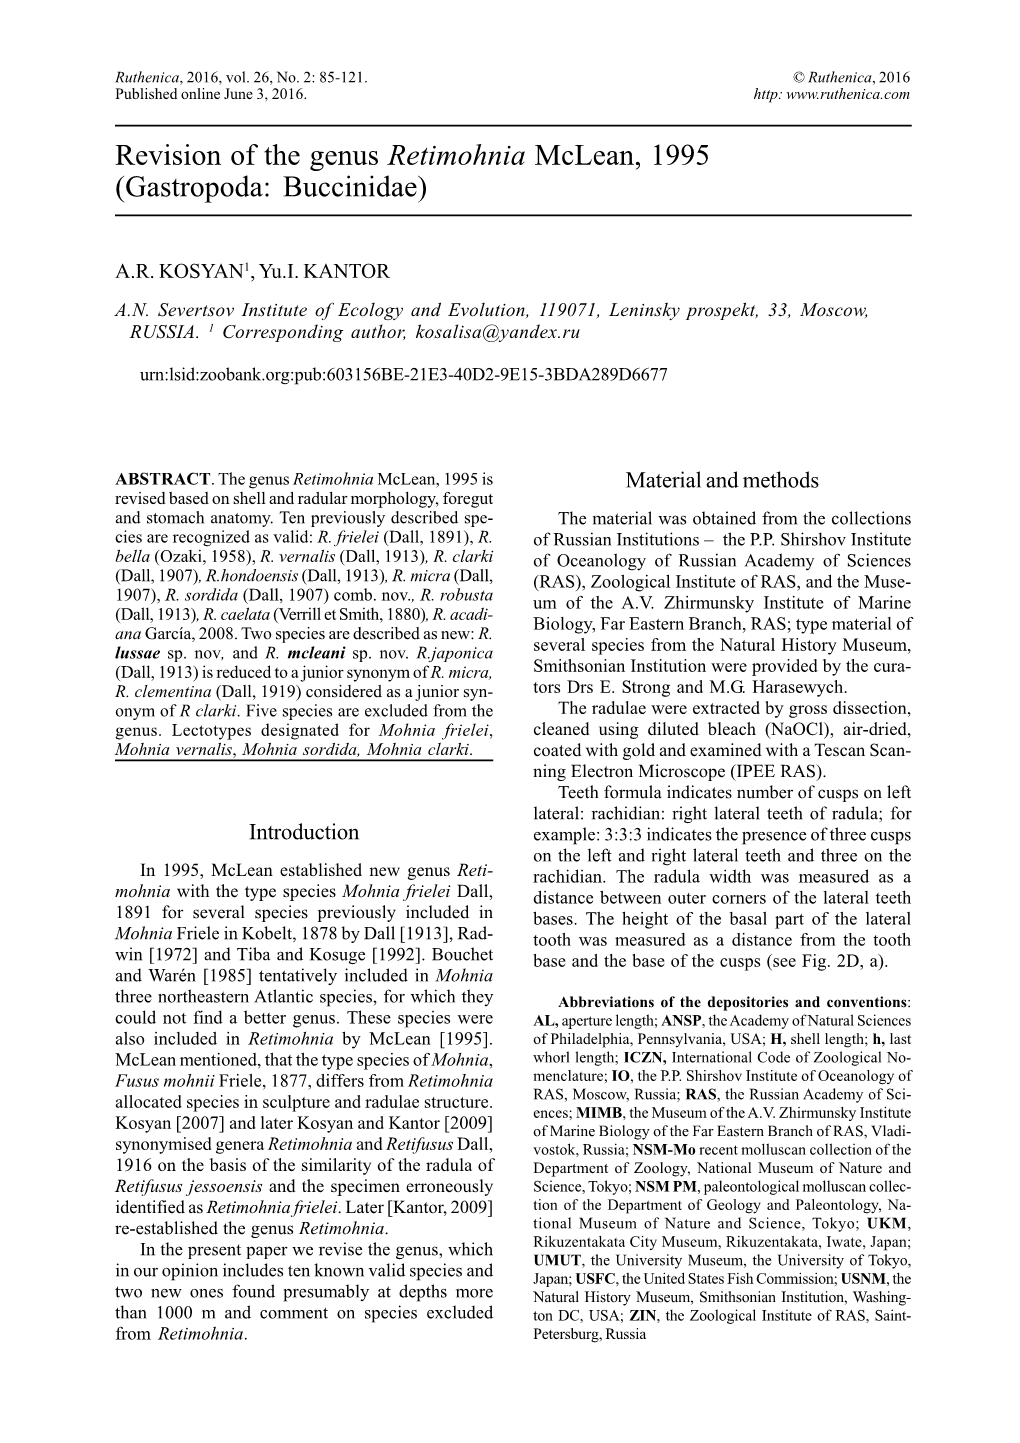 Revision of the Genus Retimohnia Mclean, 1995 (Gastropoda: Buccinidae)